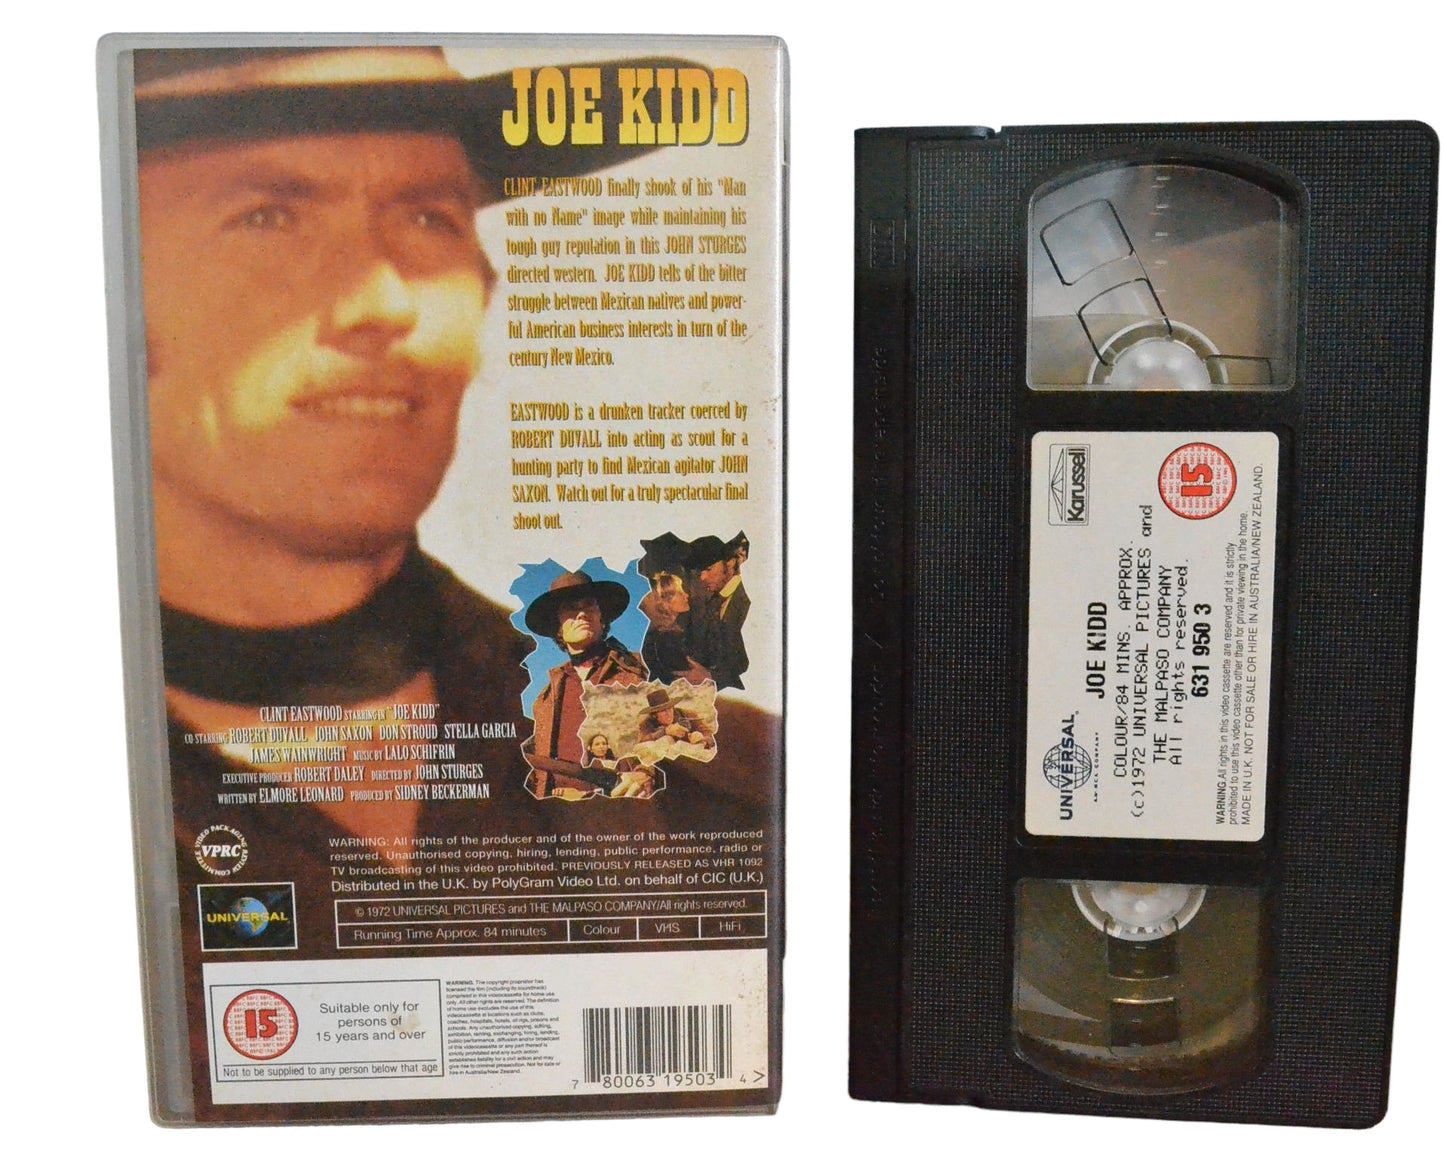 Joe Kidd - Clint Eastwood - Universal Video - 6319503 - Action - Pal - VHS-